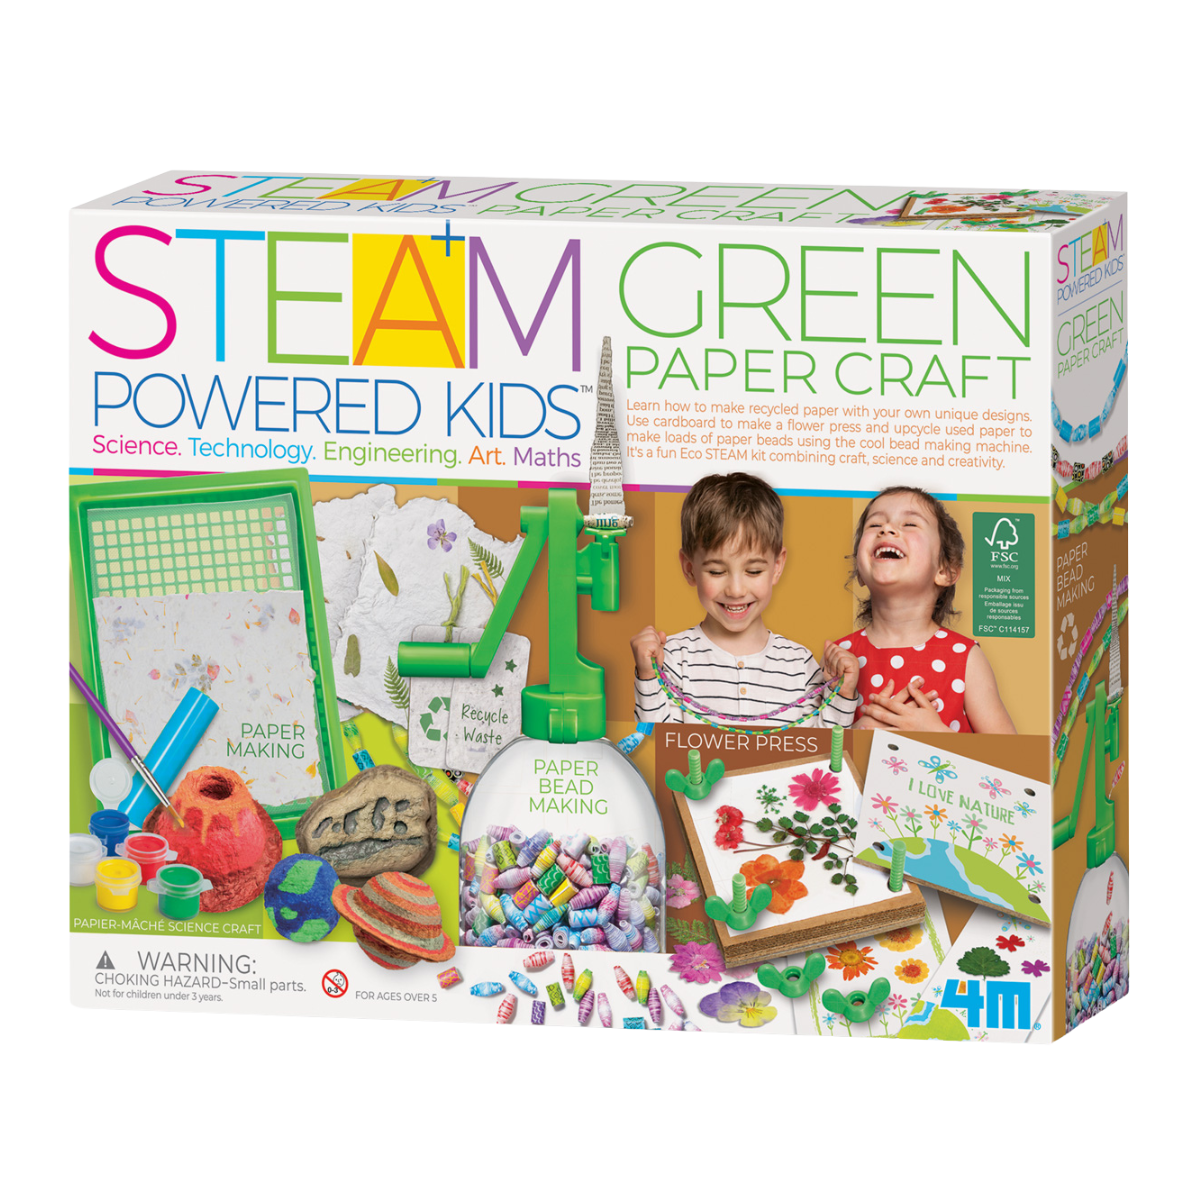 Green Paper Craft Steam